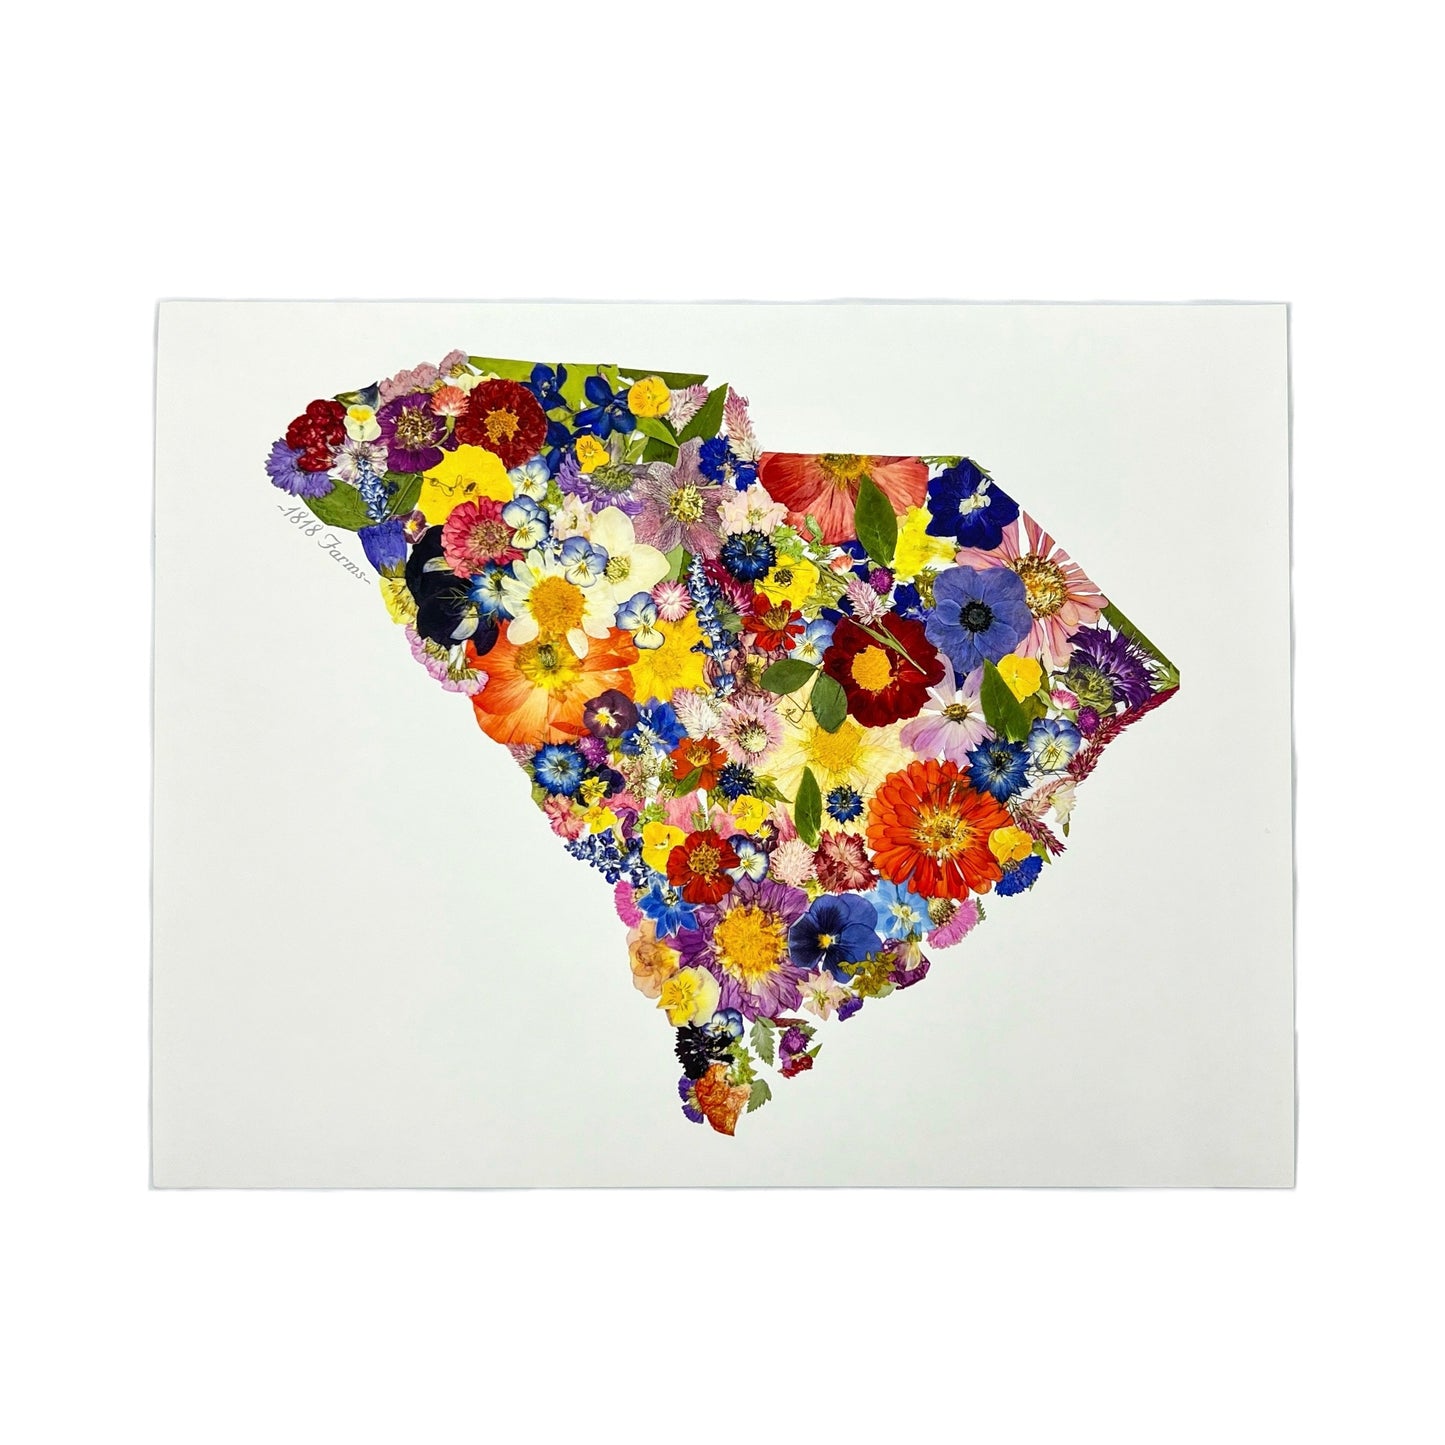 State Themed Giclée Print  - "Where I Bloom" Collection Giclee Art Print 1818 Farms 8"x10" South Carolina 